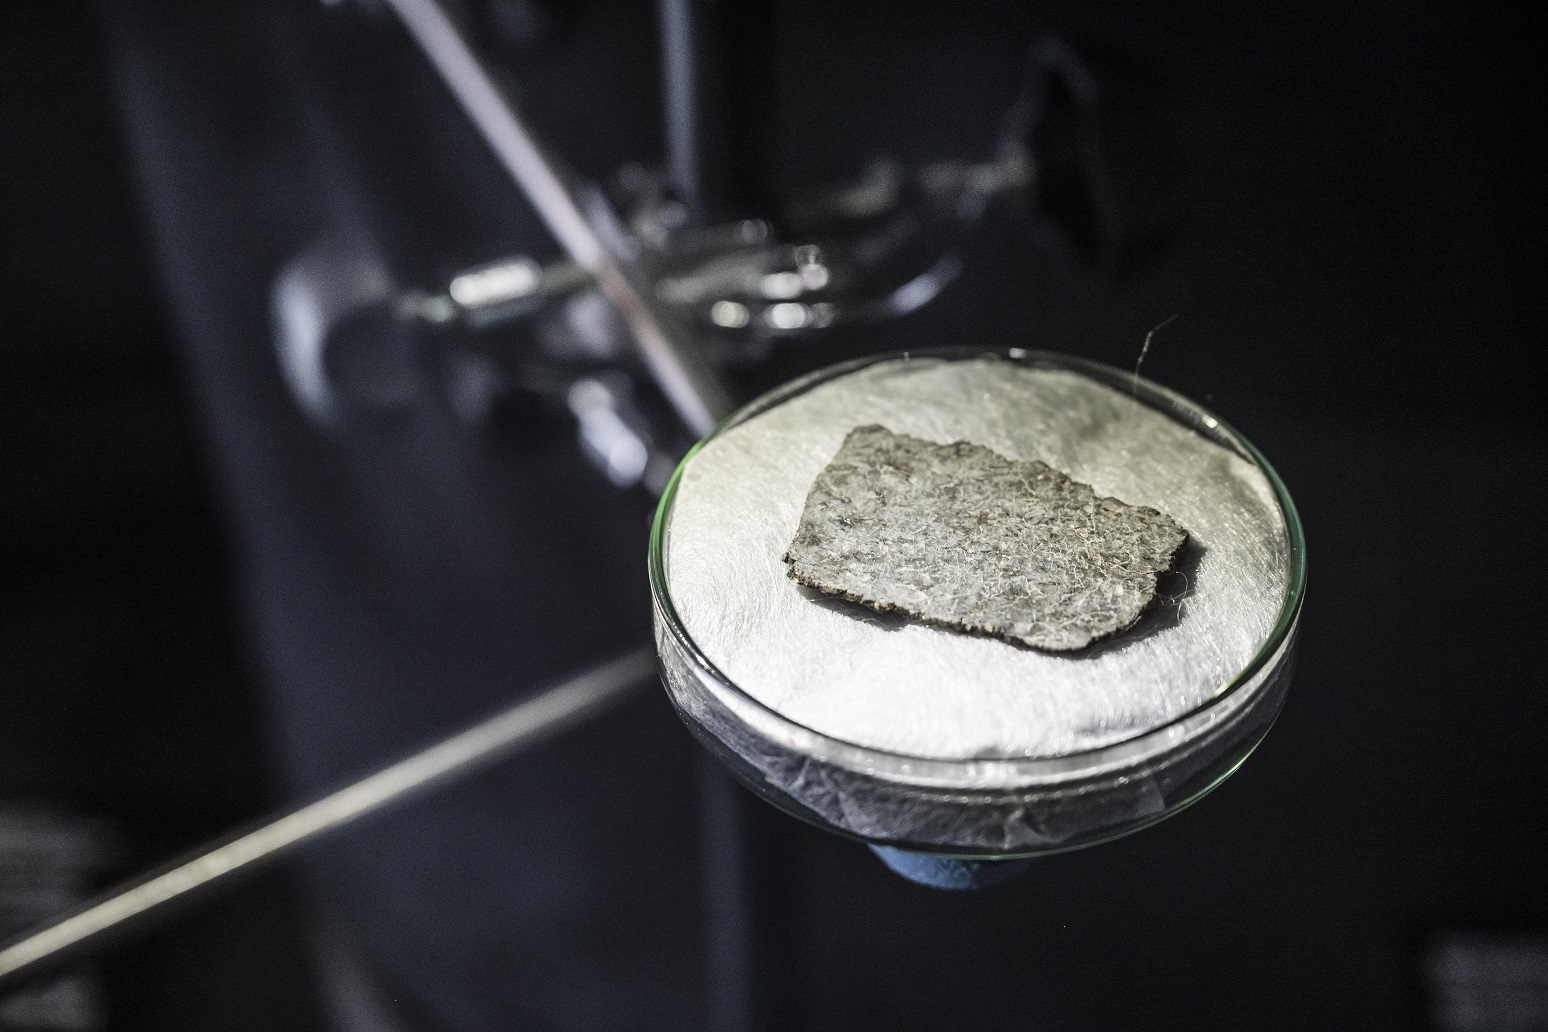 El Museu de les Ciències exhibe un fragmento de meteorito de origen mar...